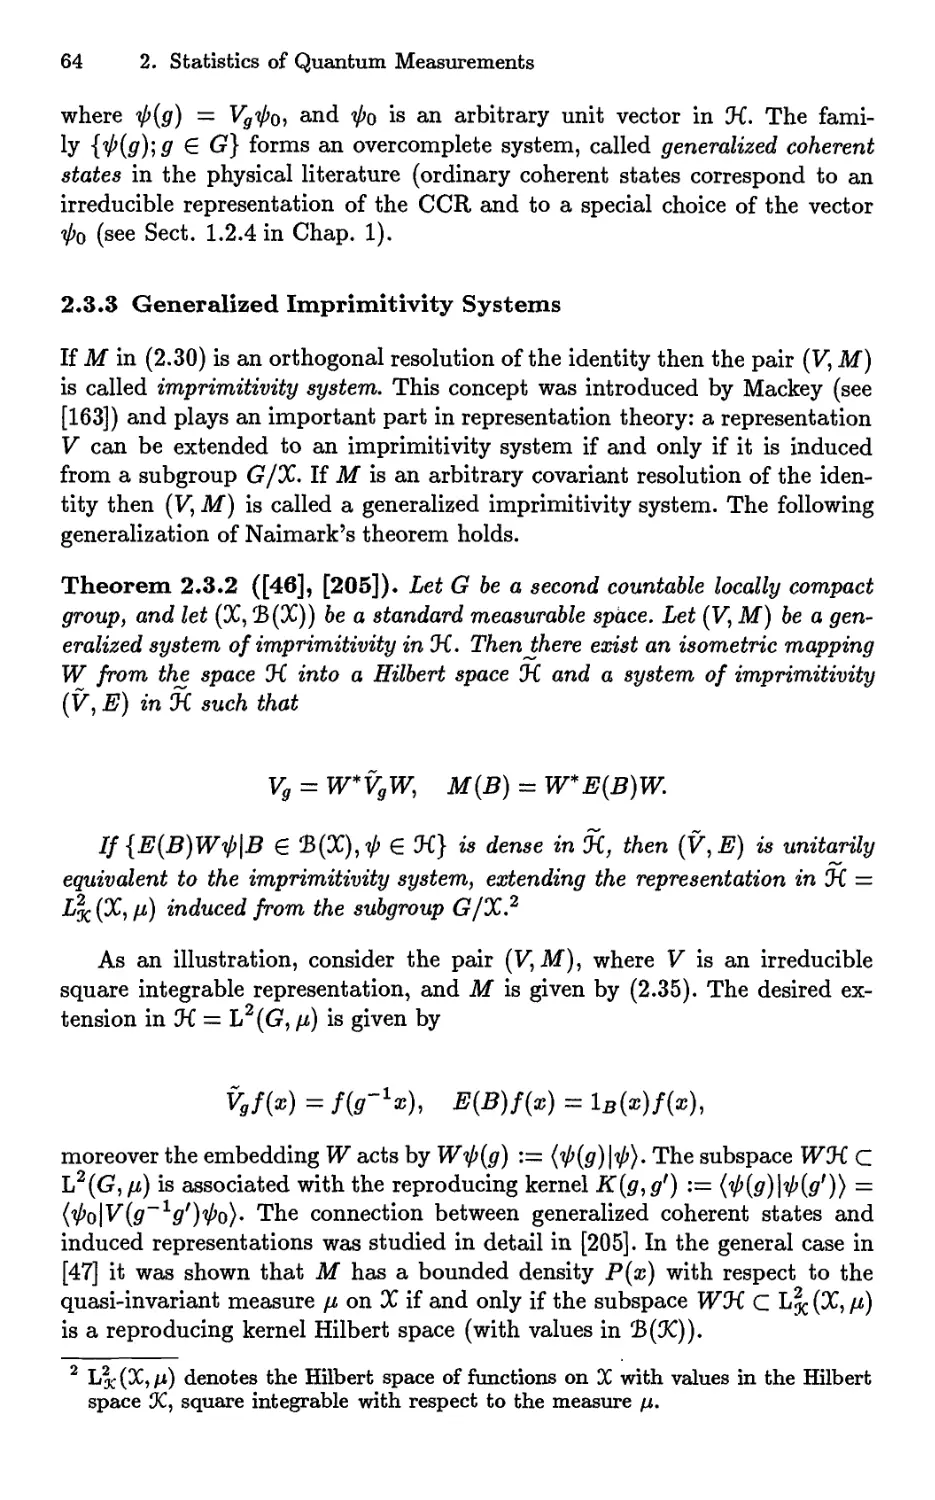 2.3.3 Generalized Imprimitivity Systems